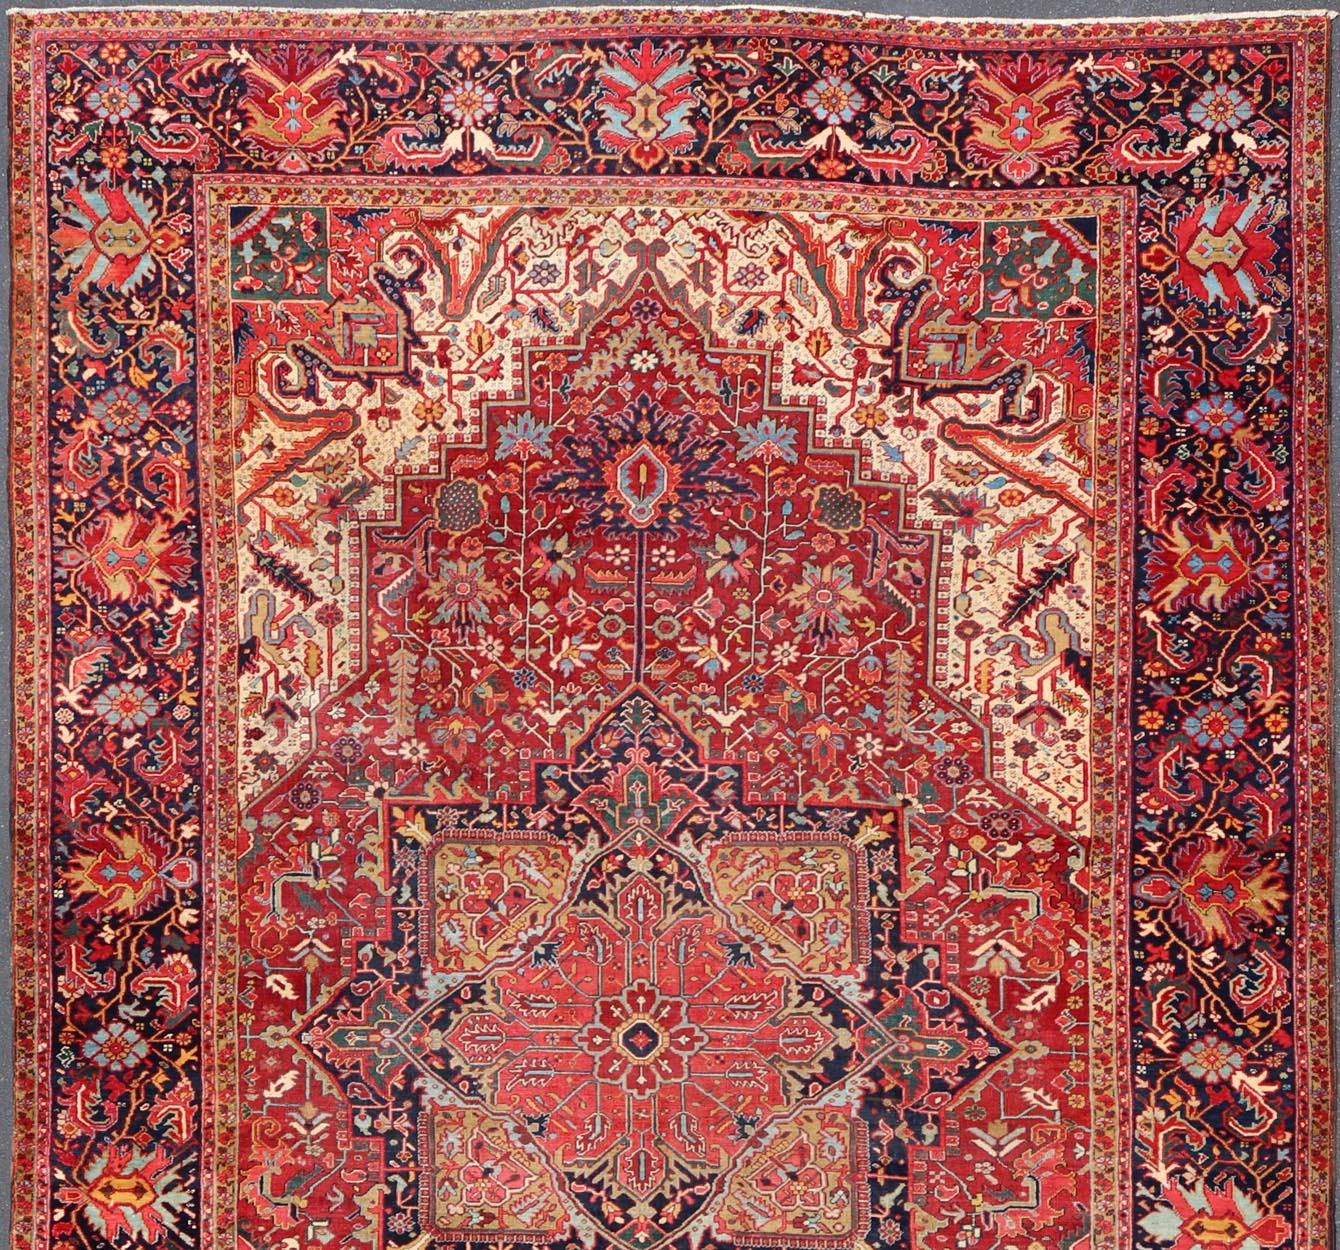 Richly colored large antique Persian Heriz-Serapi carpet with geometric design.  Keivan Woven Arts / rug C-0535, country of origin / type: Iran / Heriz-Serapi, circa 1900.
Measures: 11'4 x 17'11.
This incredible Heriz-Serapi features a large-scale